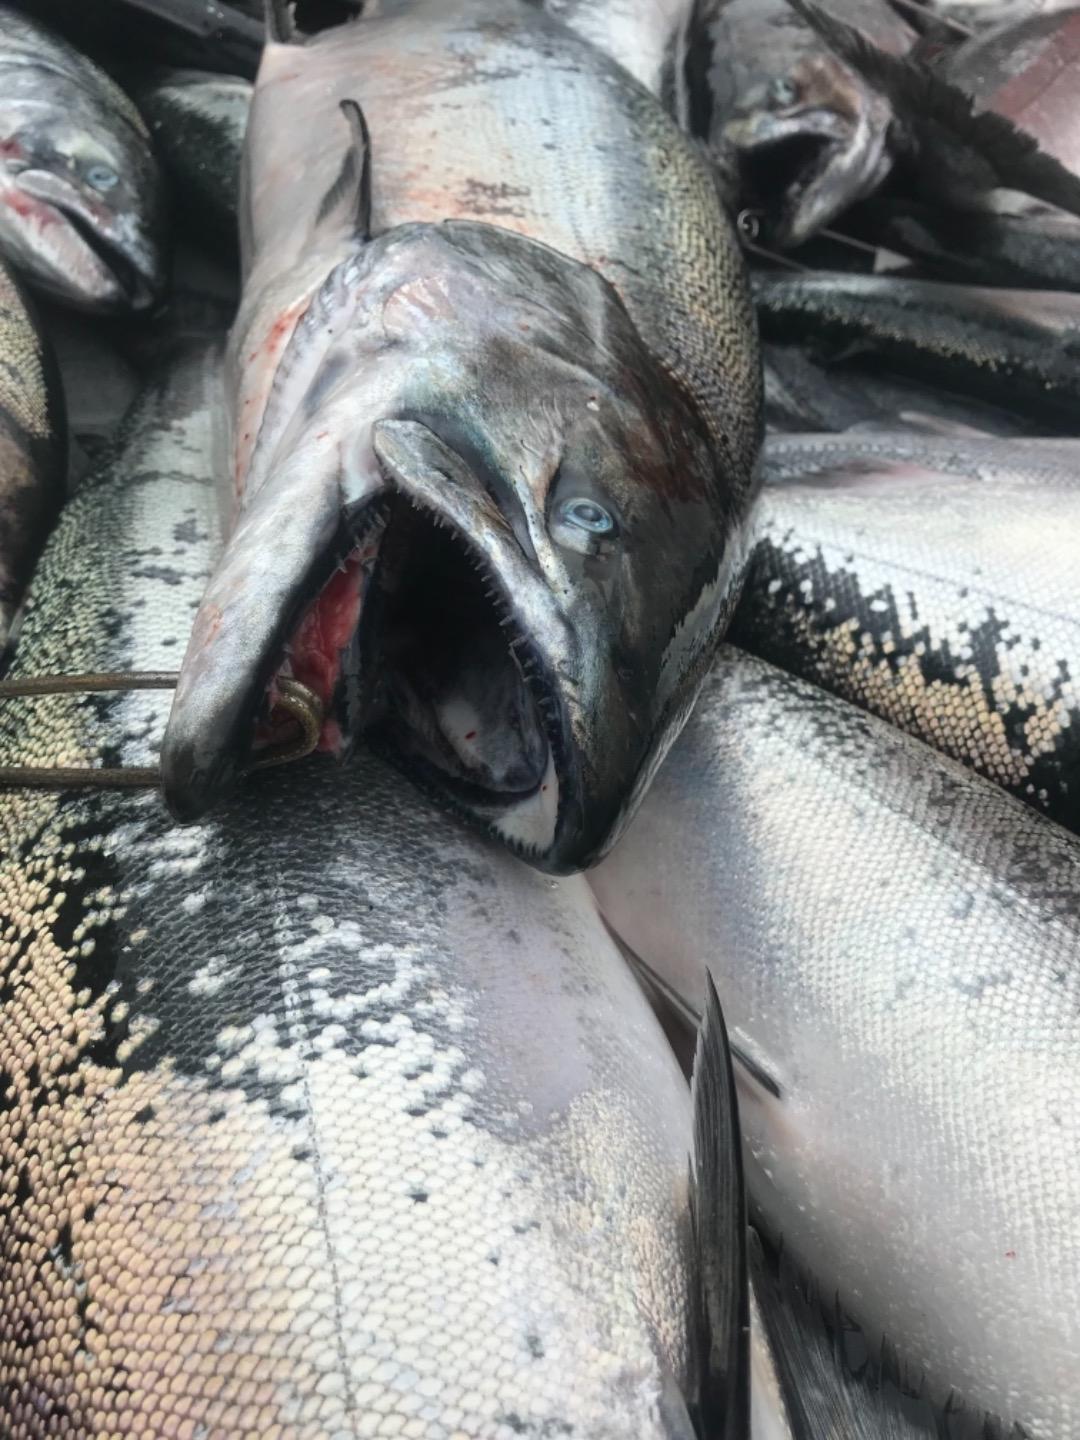 Wide open salmon bite for the Yuba City Fire Department 